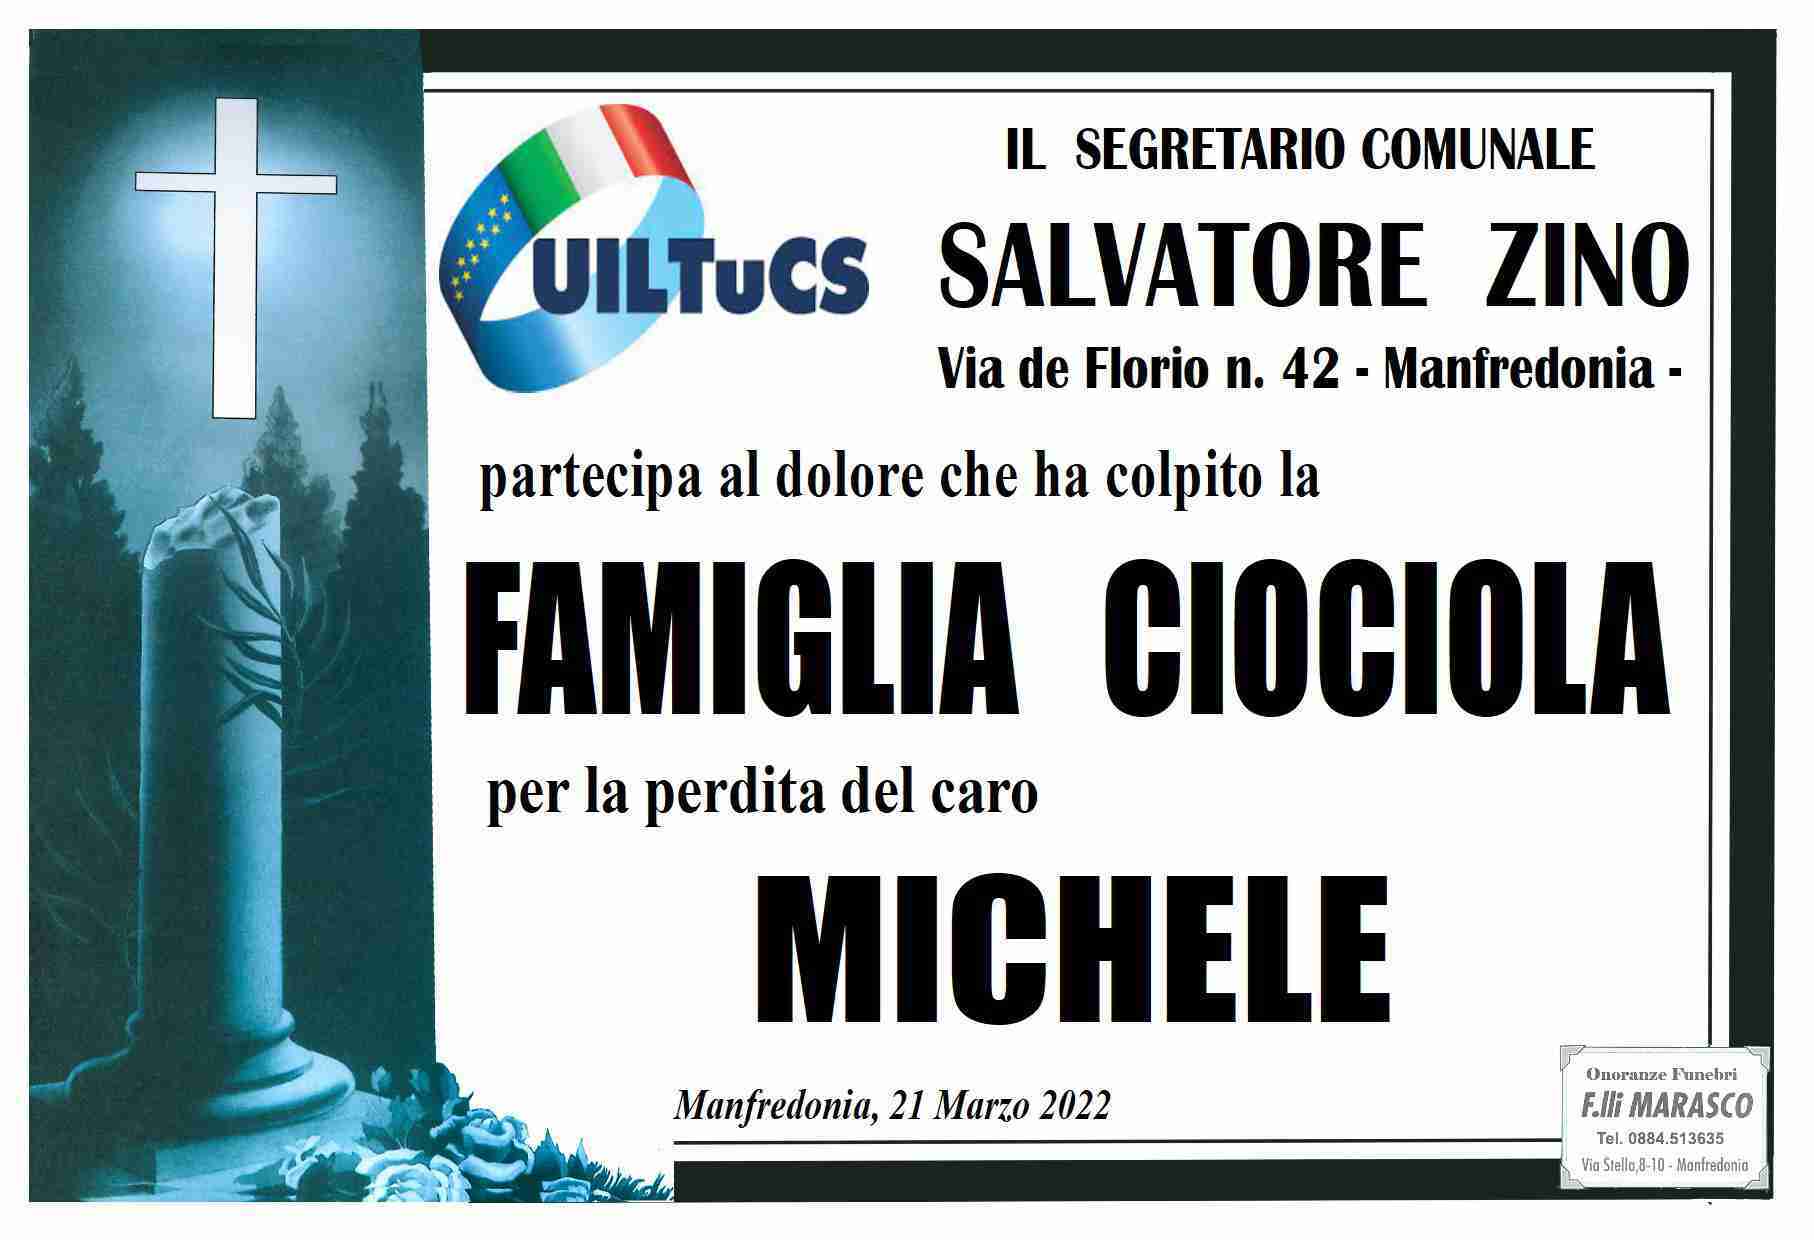 Michele Ciociola